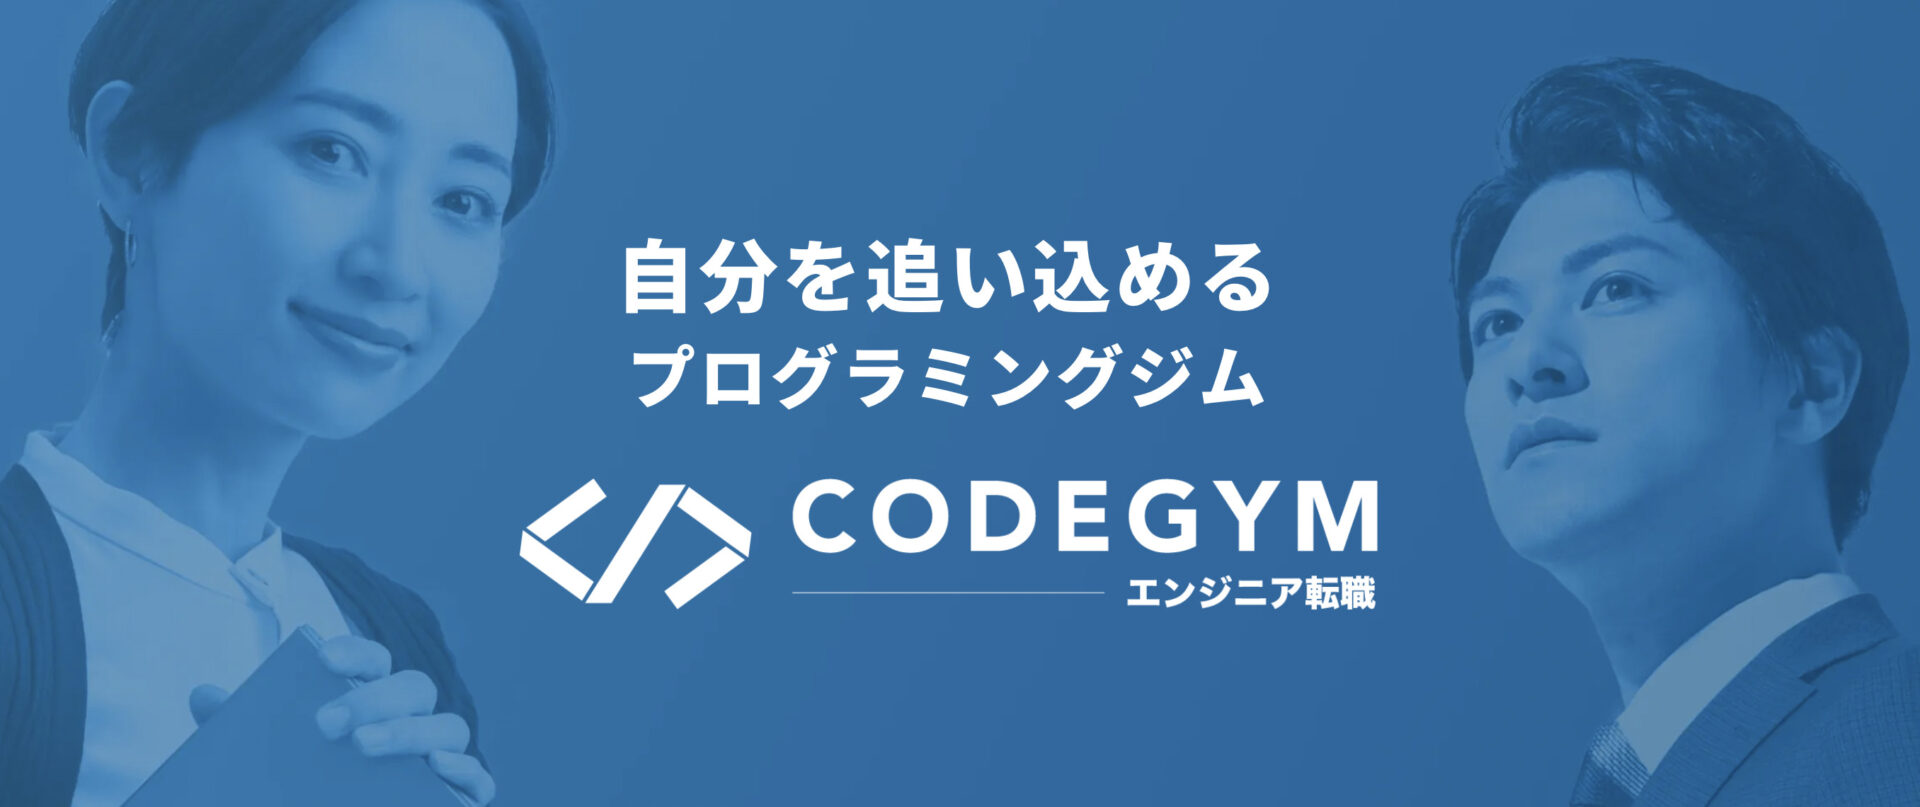 CODEGYM(コードジム)公式サイトの画像